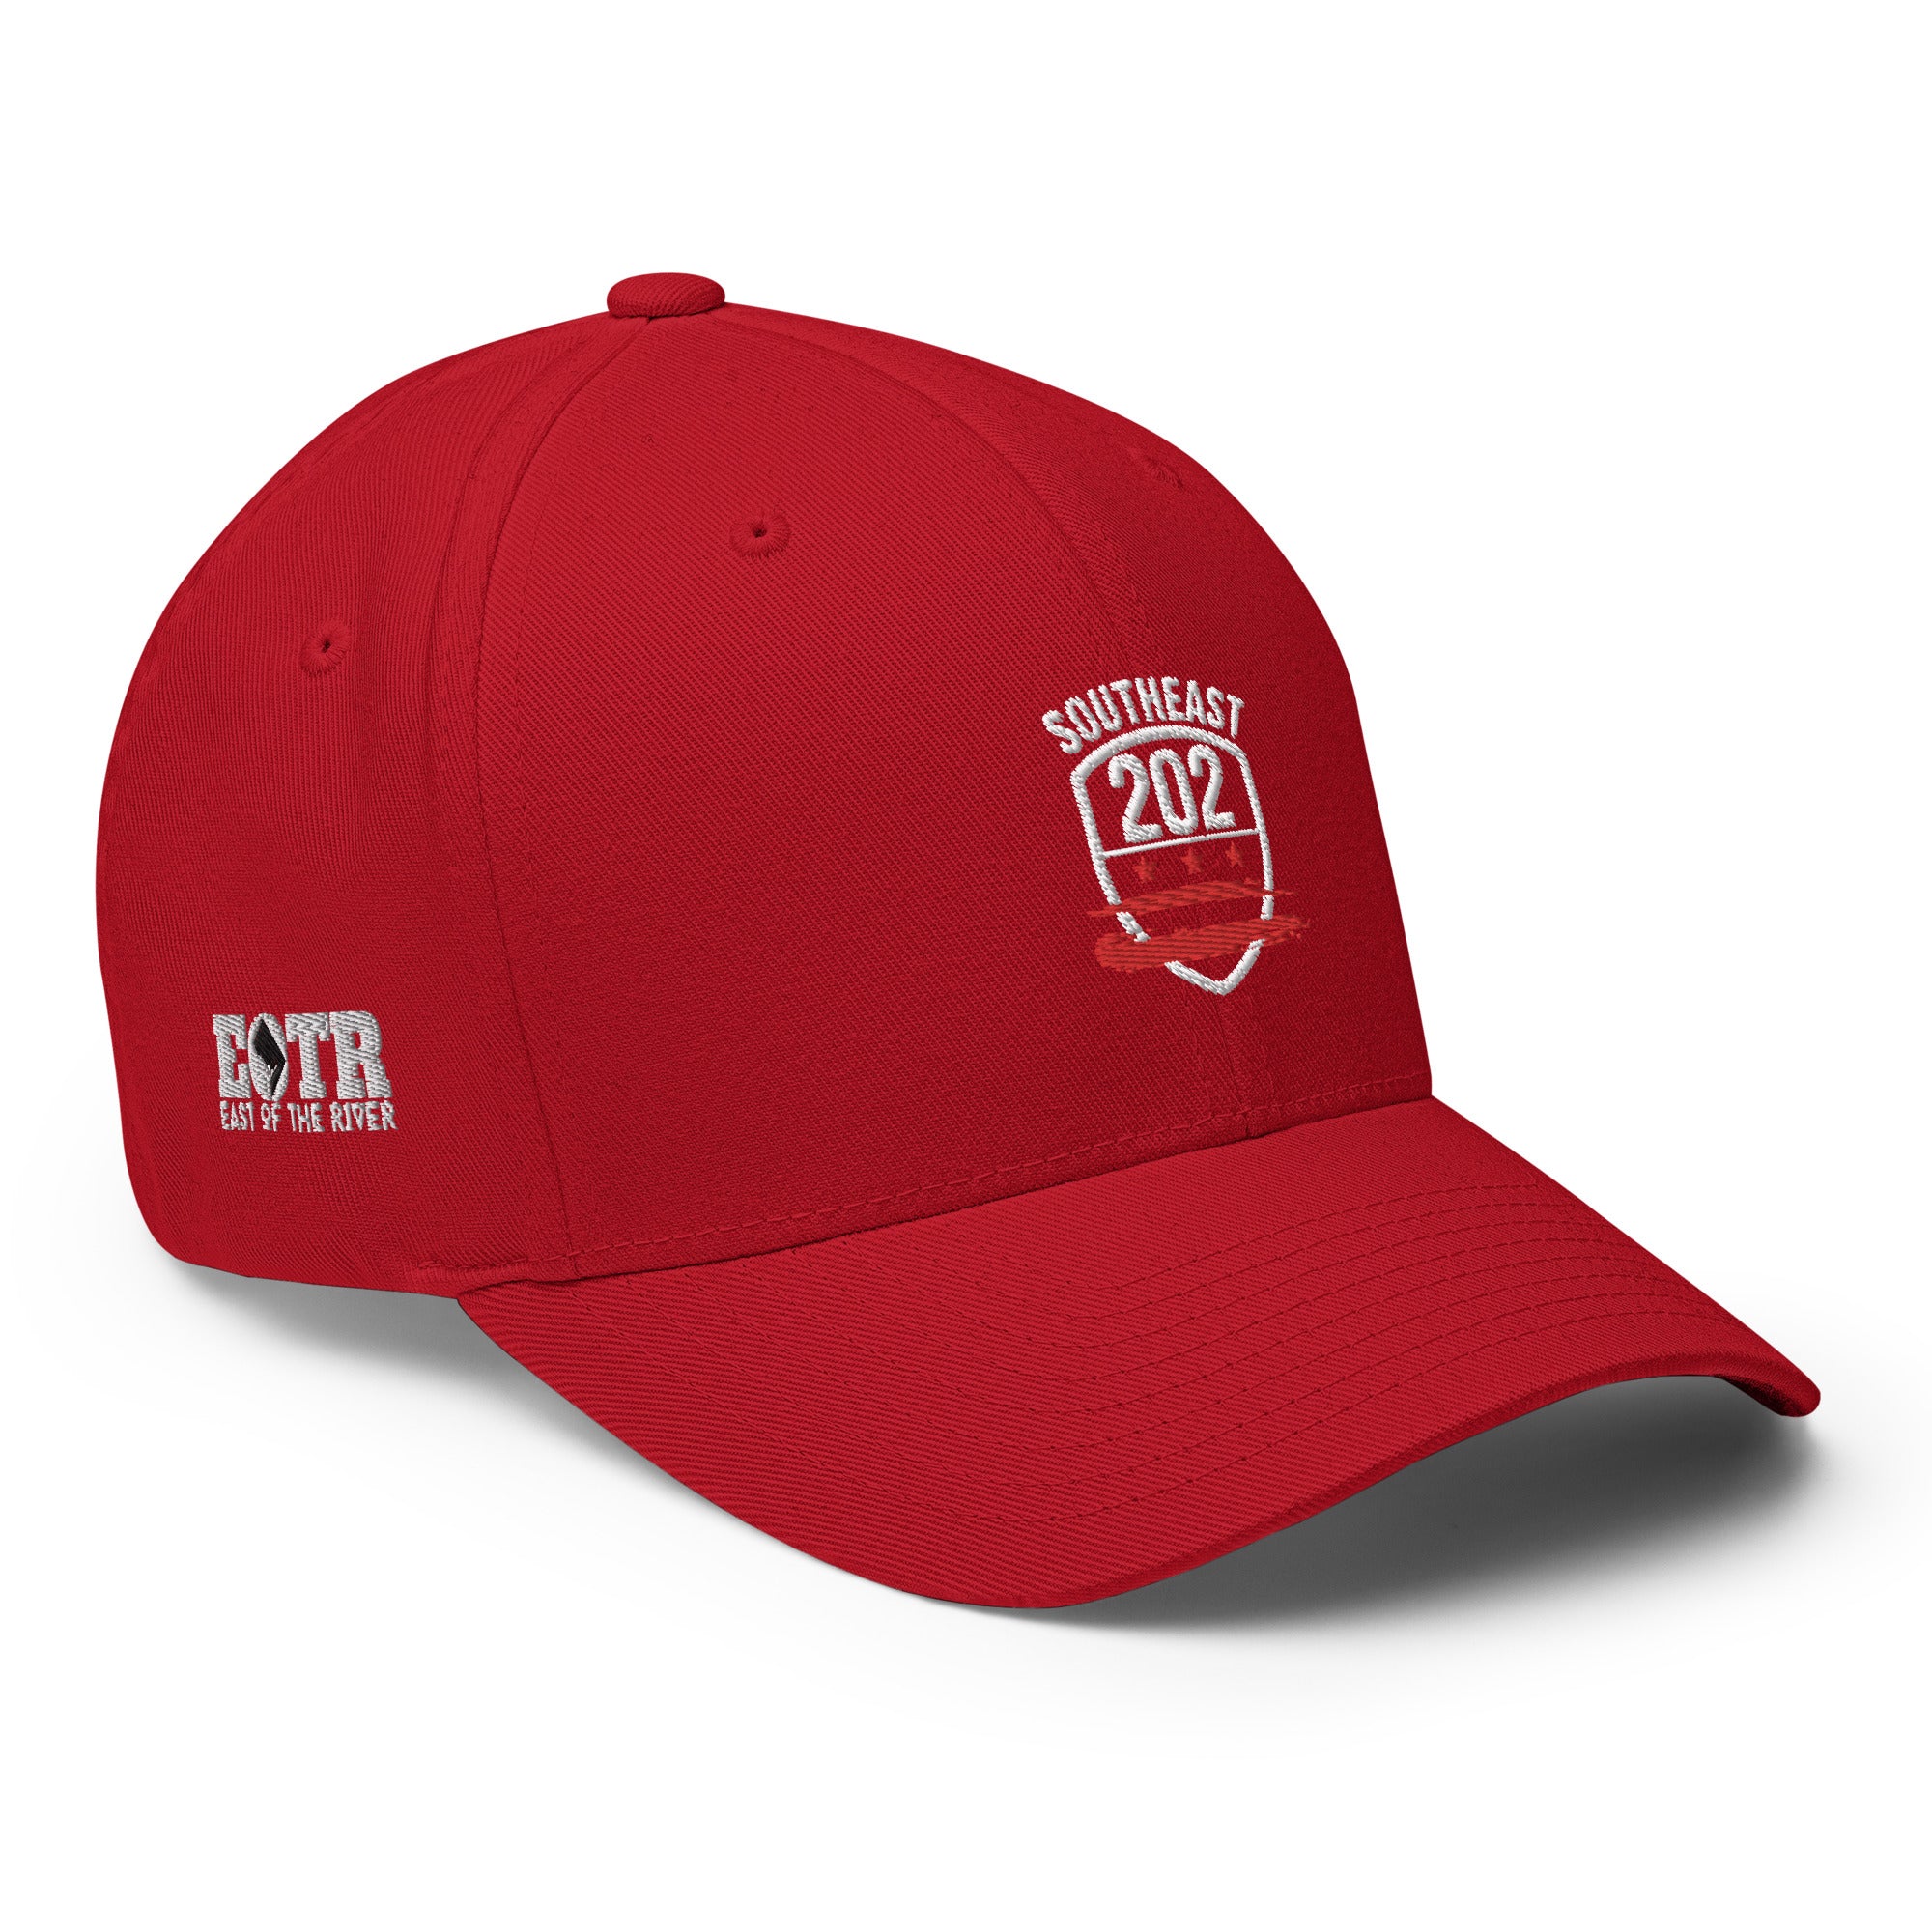 "Southeast / 202 Emblem & EOTR" - Twill Cap(Royal Blue, Red, or Multicam Colors)